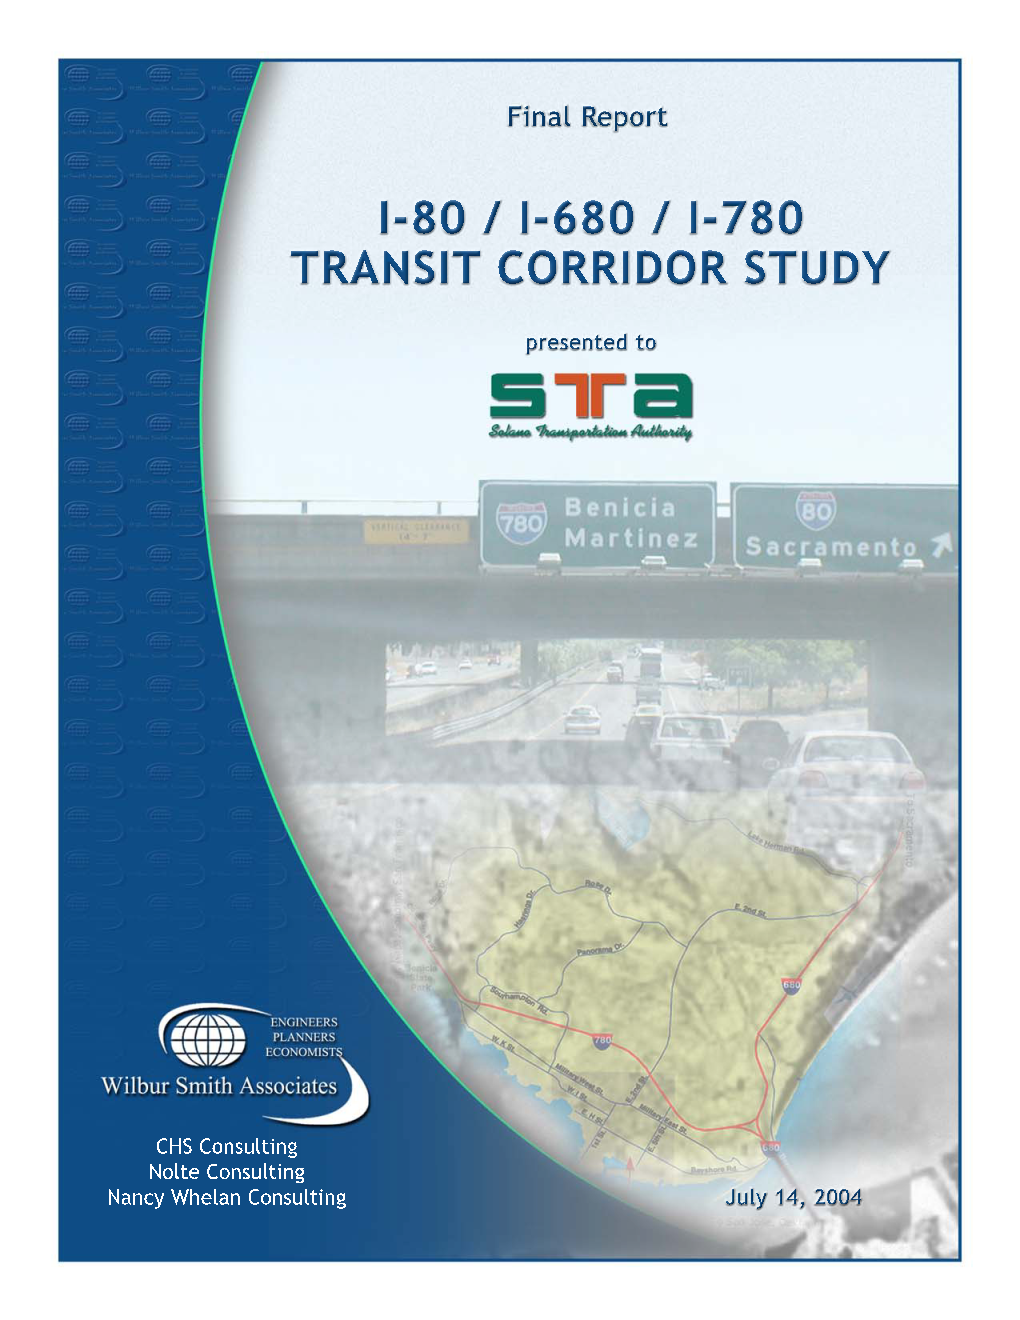 I-80/I-680 Transit Corridor Study